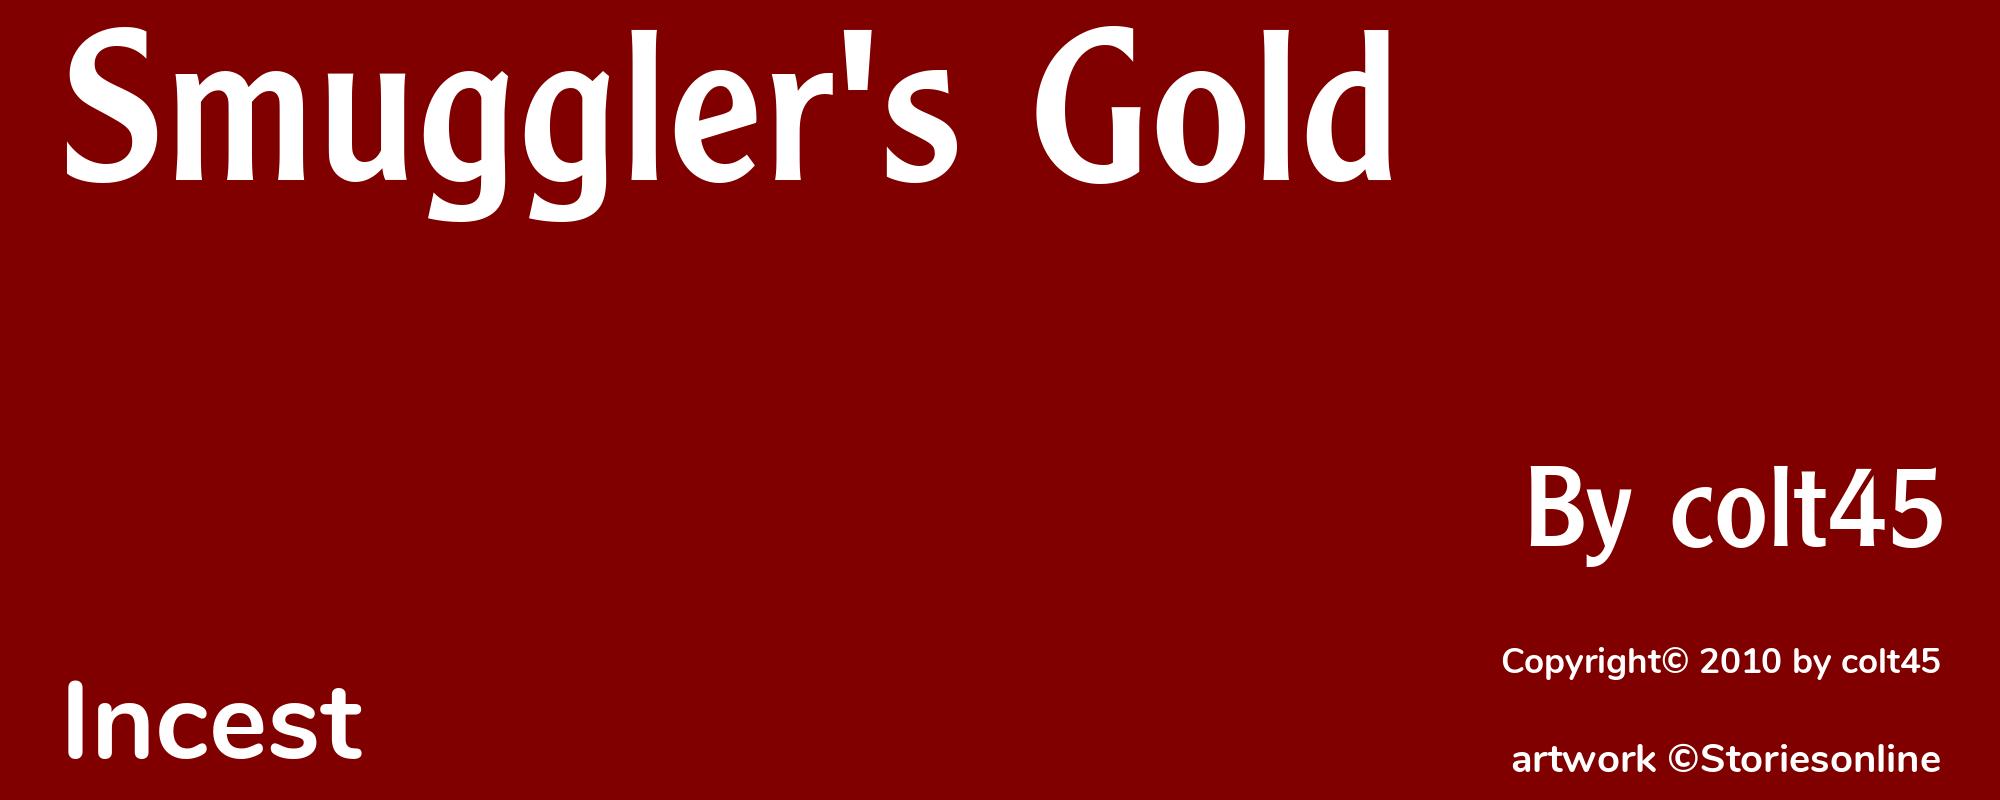 Smuggler's Gold - Cover